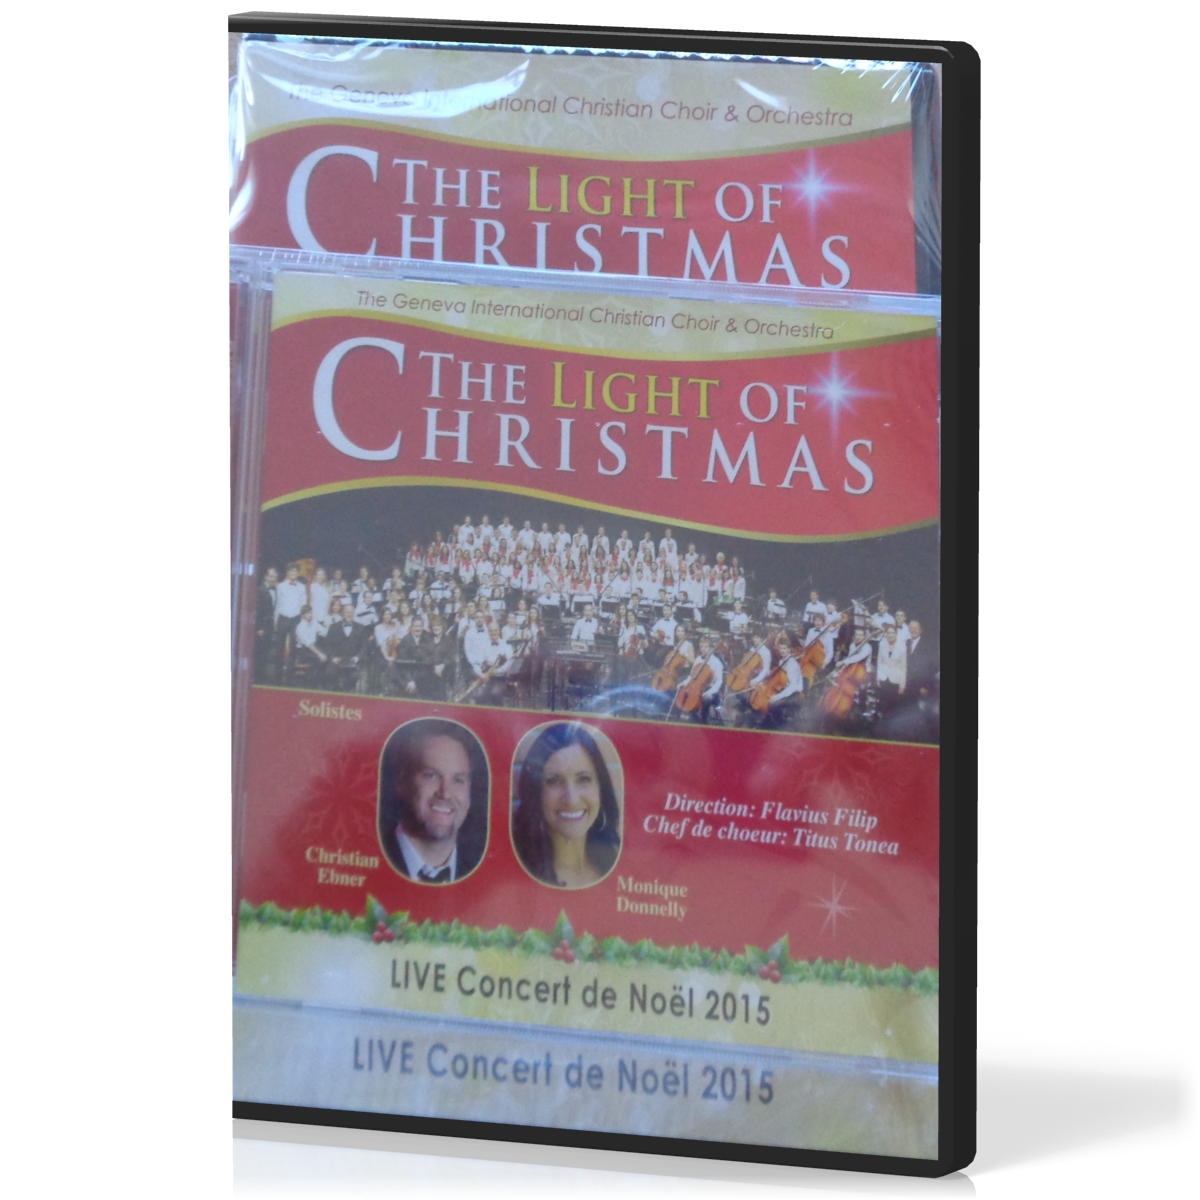 Light of Christmas (The) - [2 CD + DVD] Concert 2015